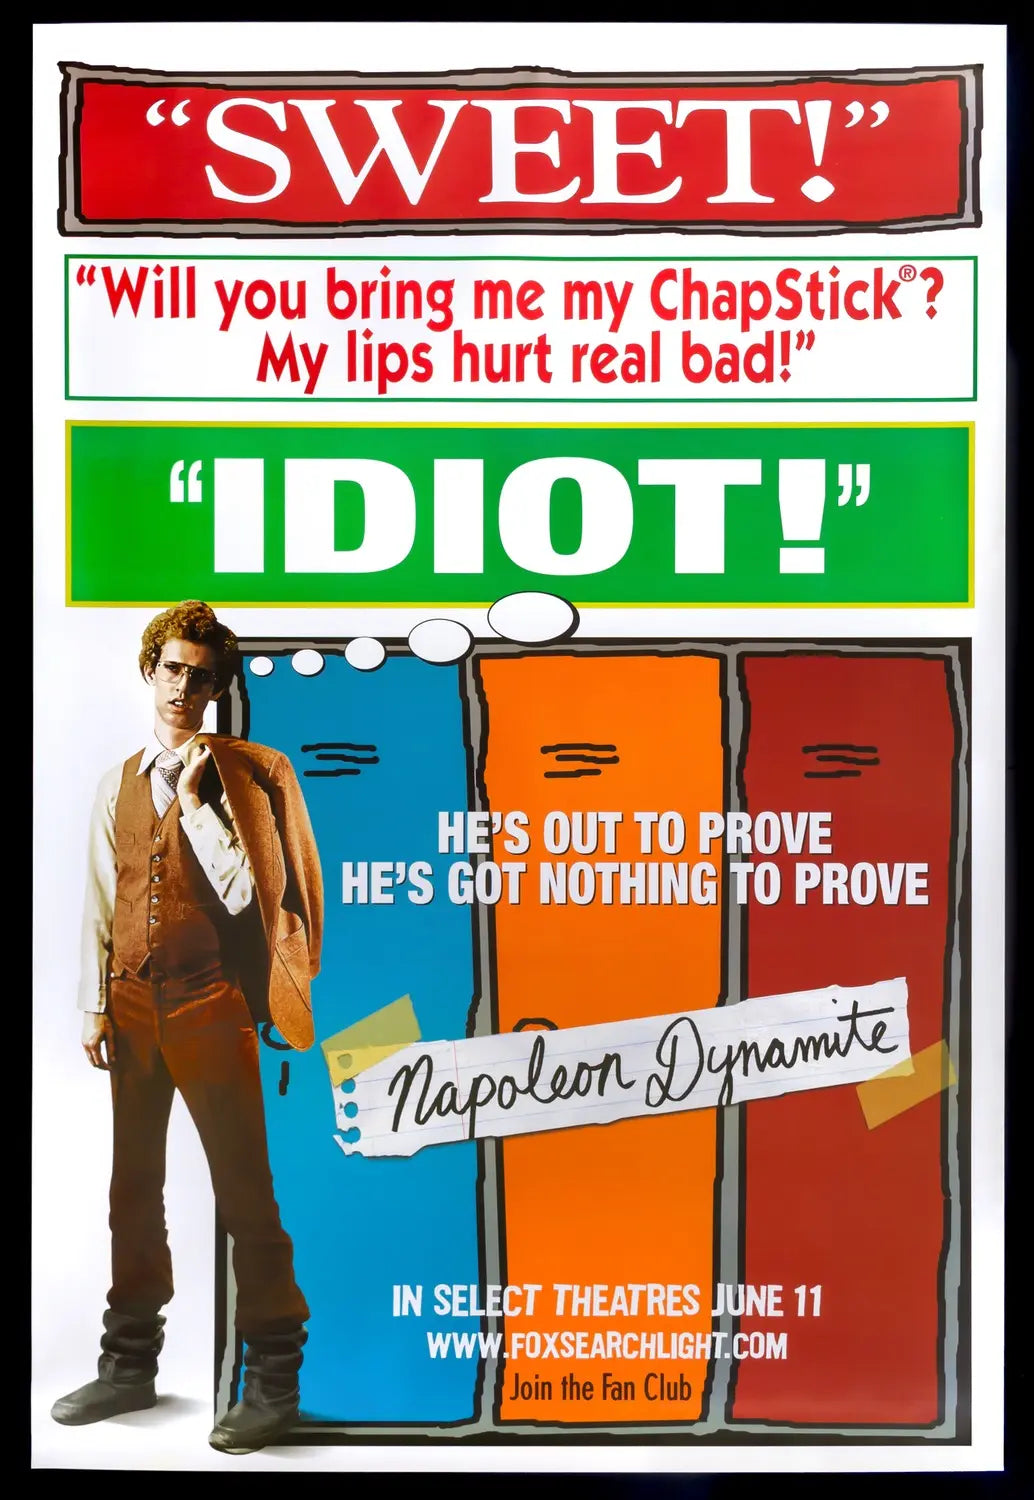 Napoleon Dynamite (2004) original movie poster for sale at Original Film Art